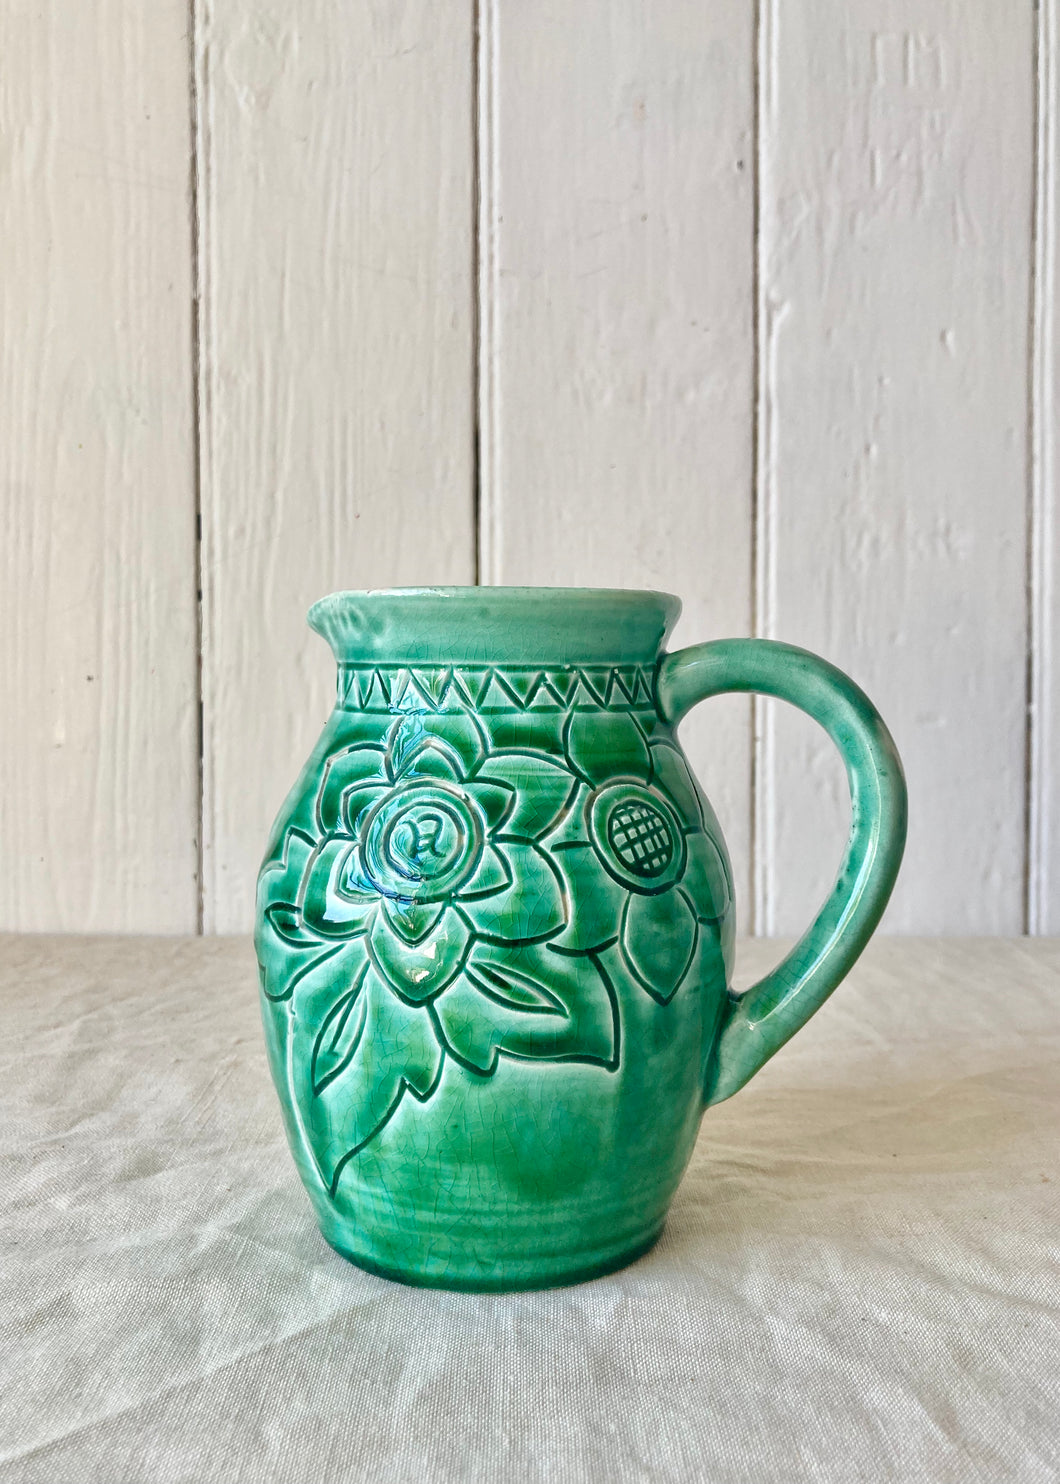 Green early 20th century handmade jug